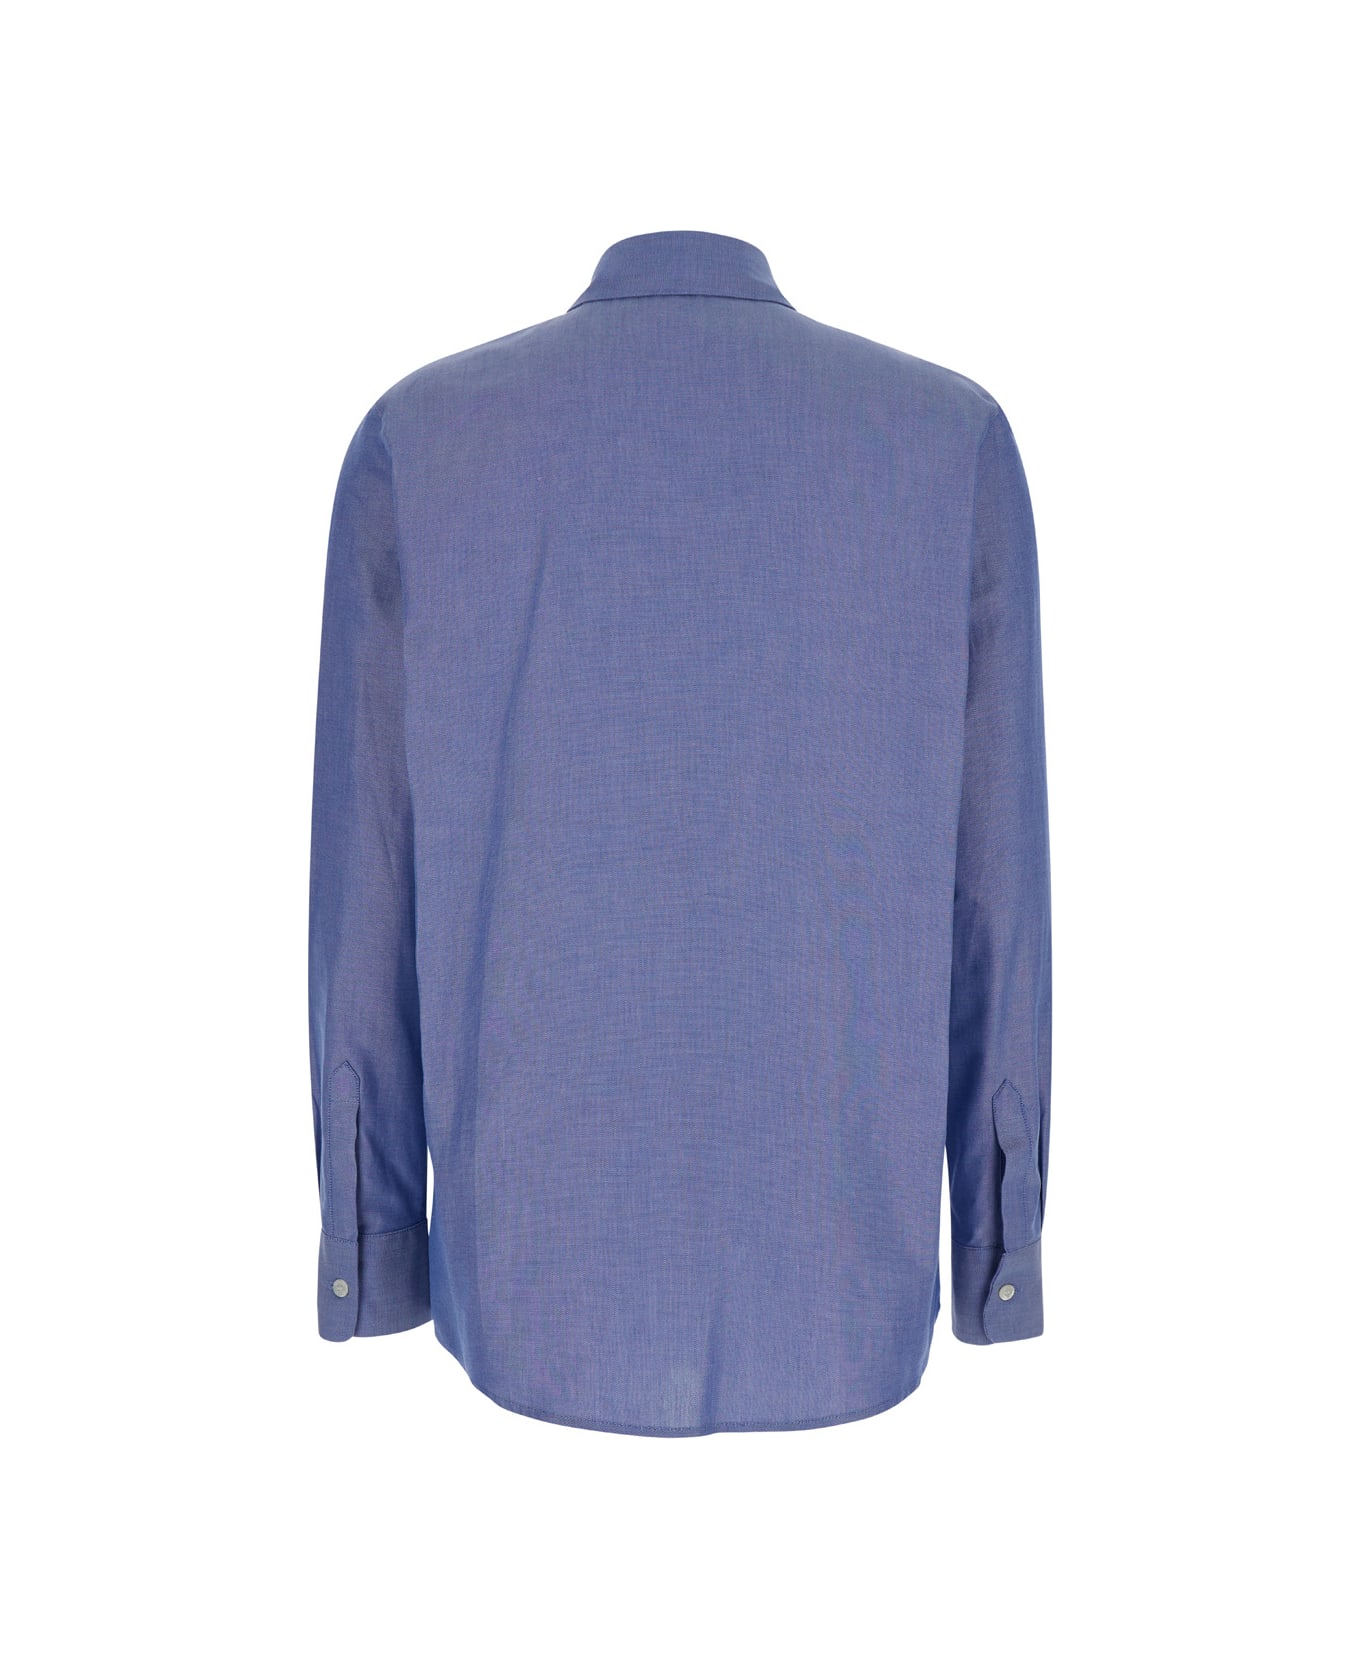 Etro Oxford Shirt - INDACO (Light blue)